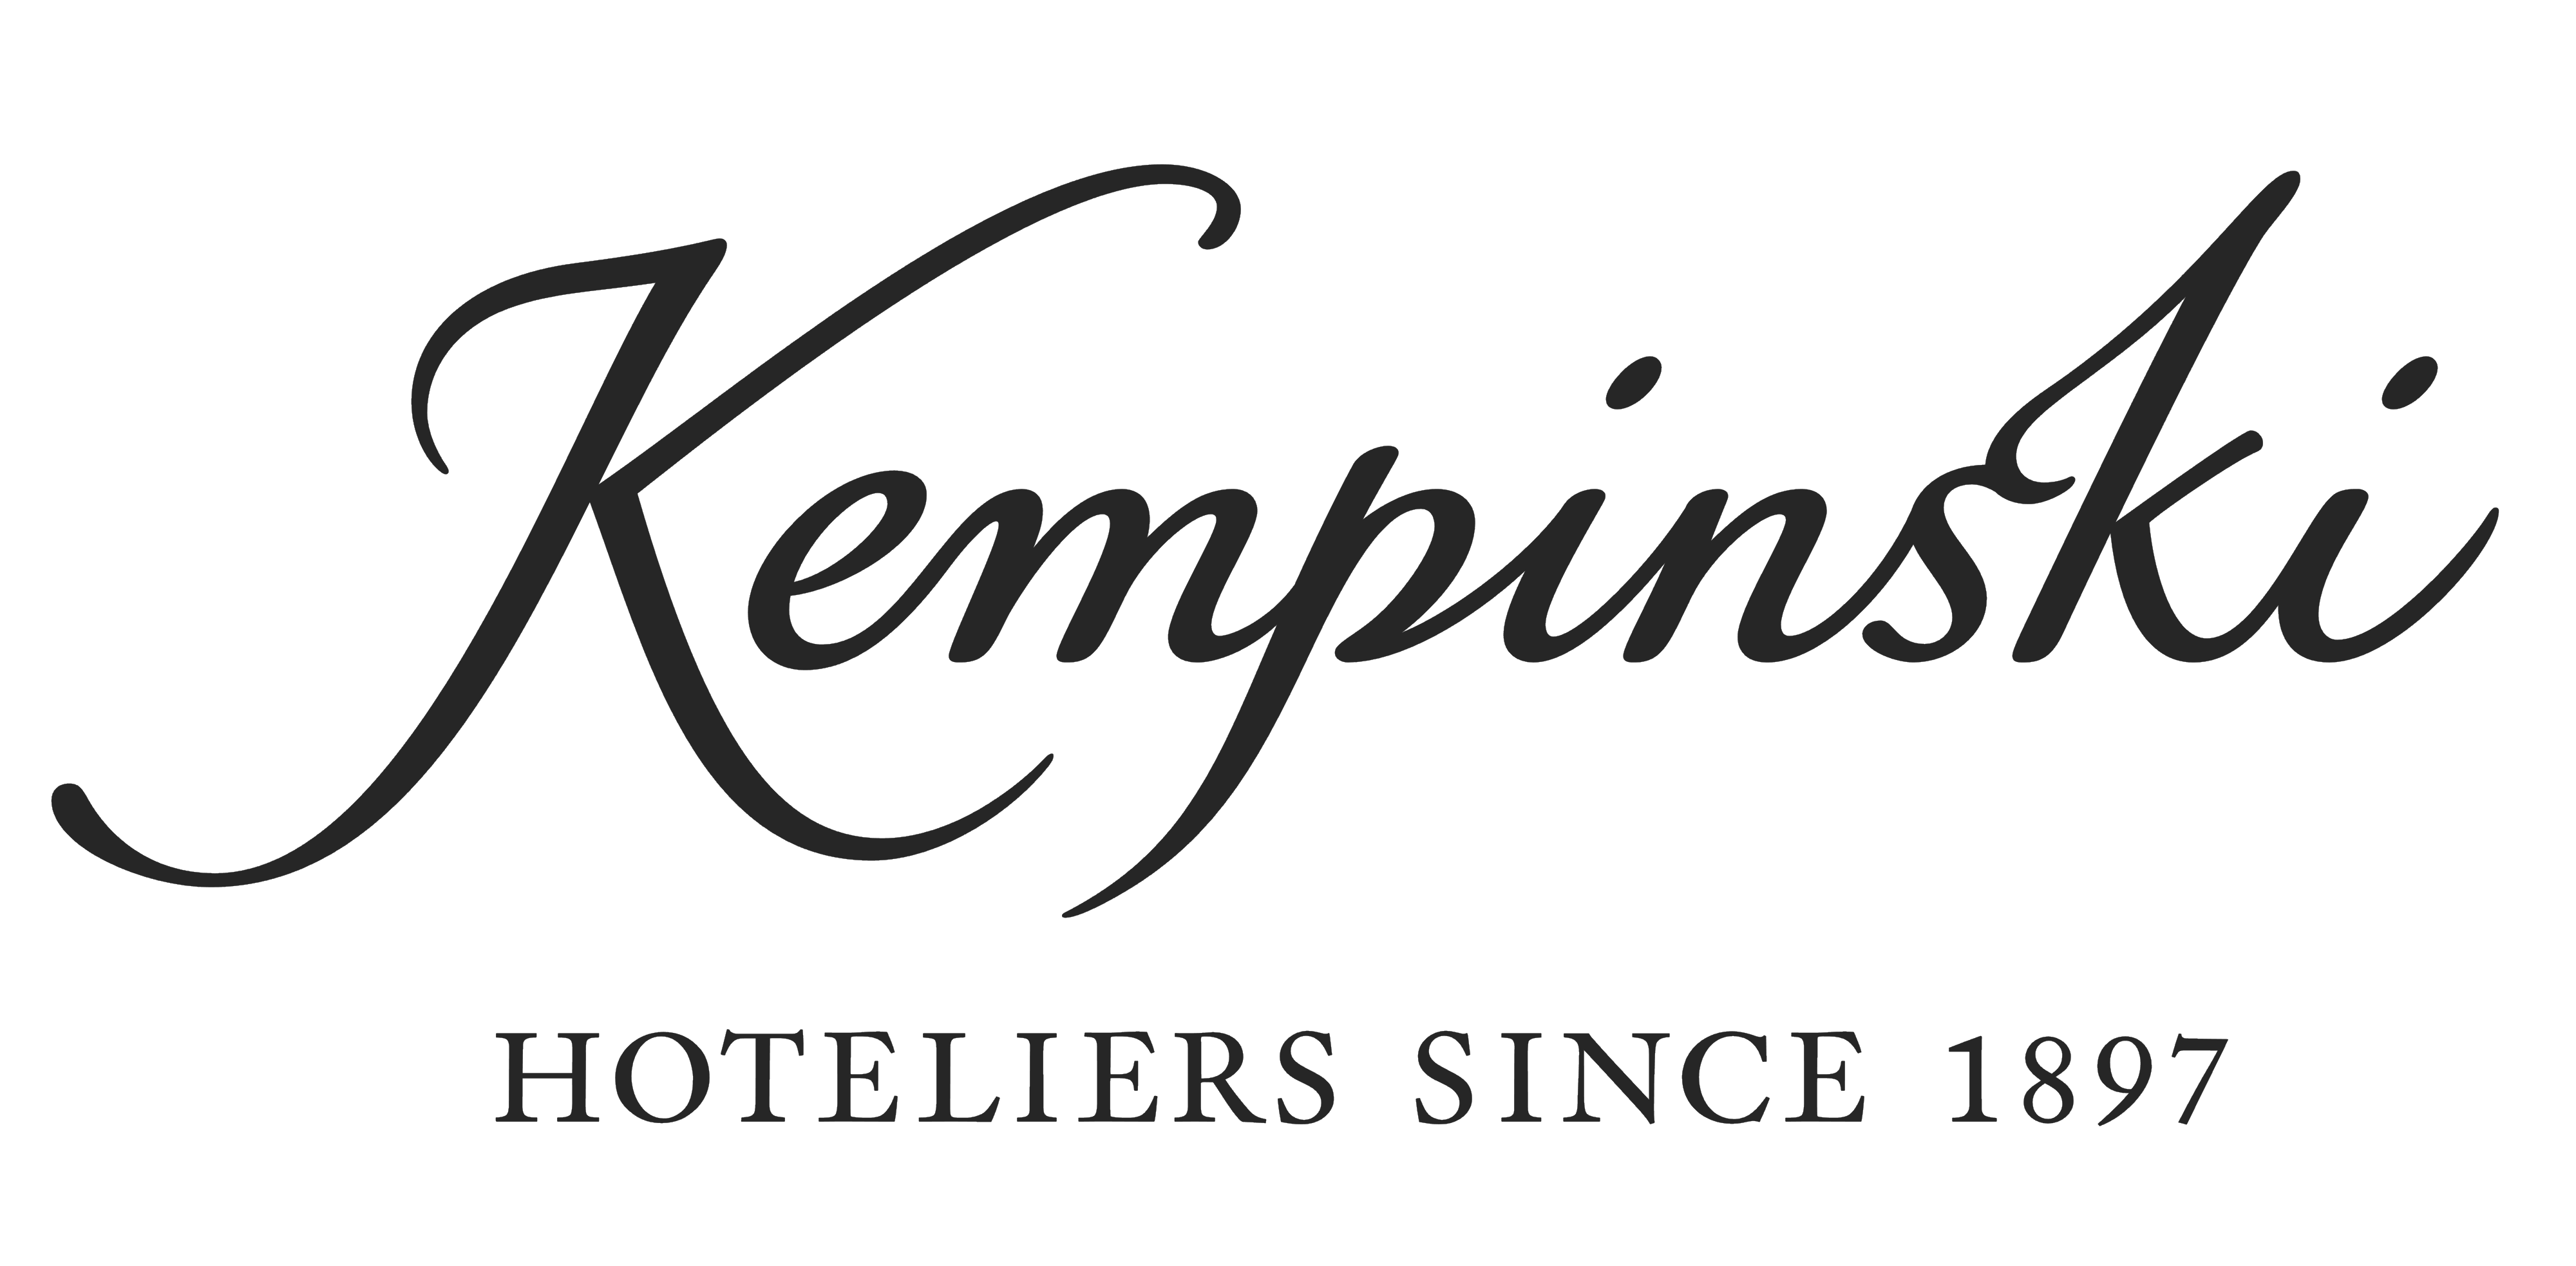 Kempinski logo, logotype